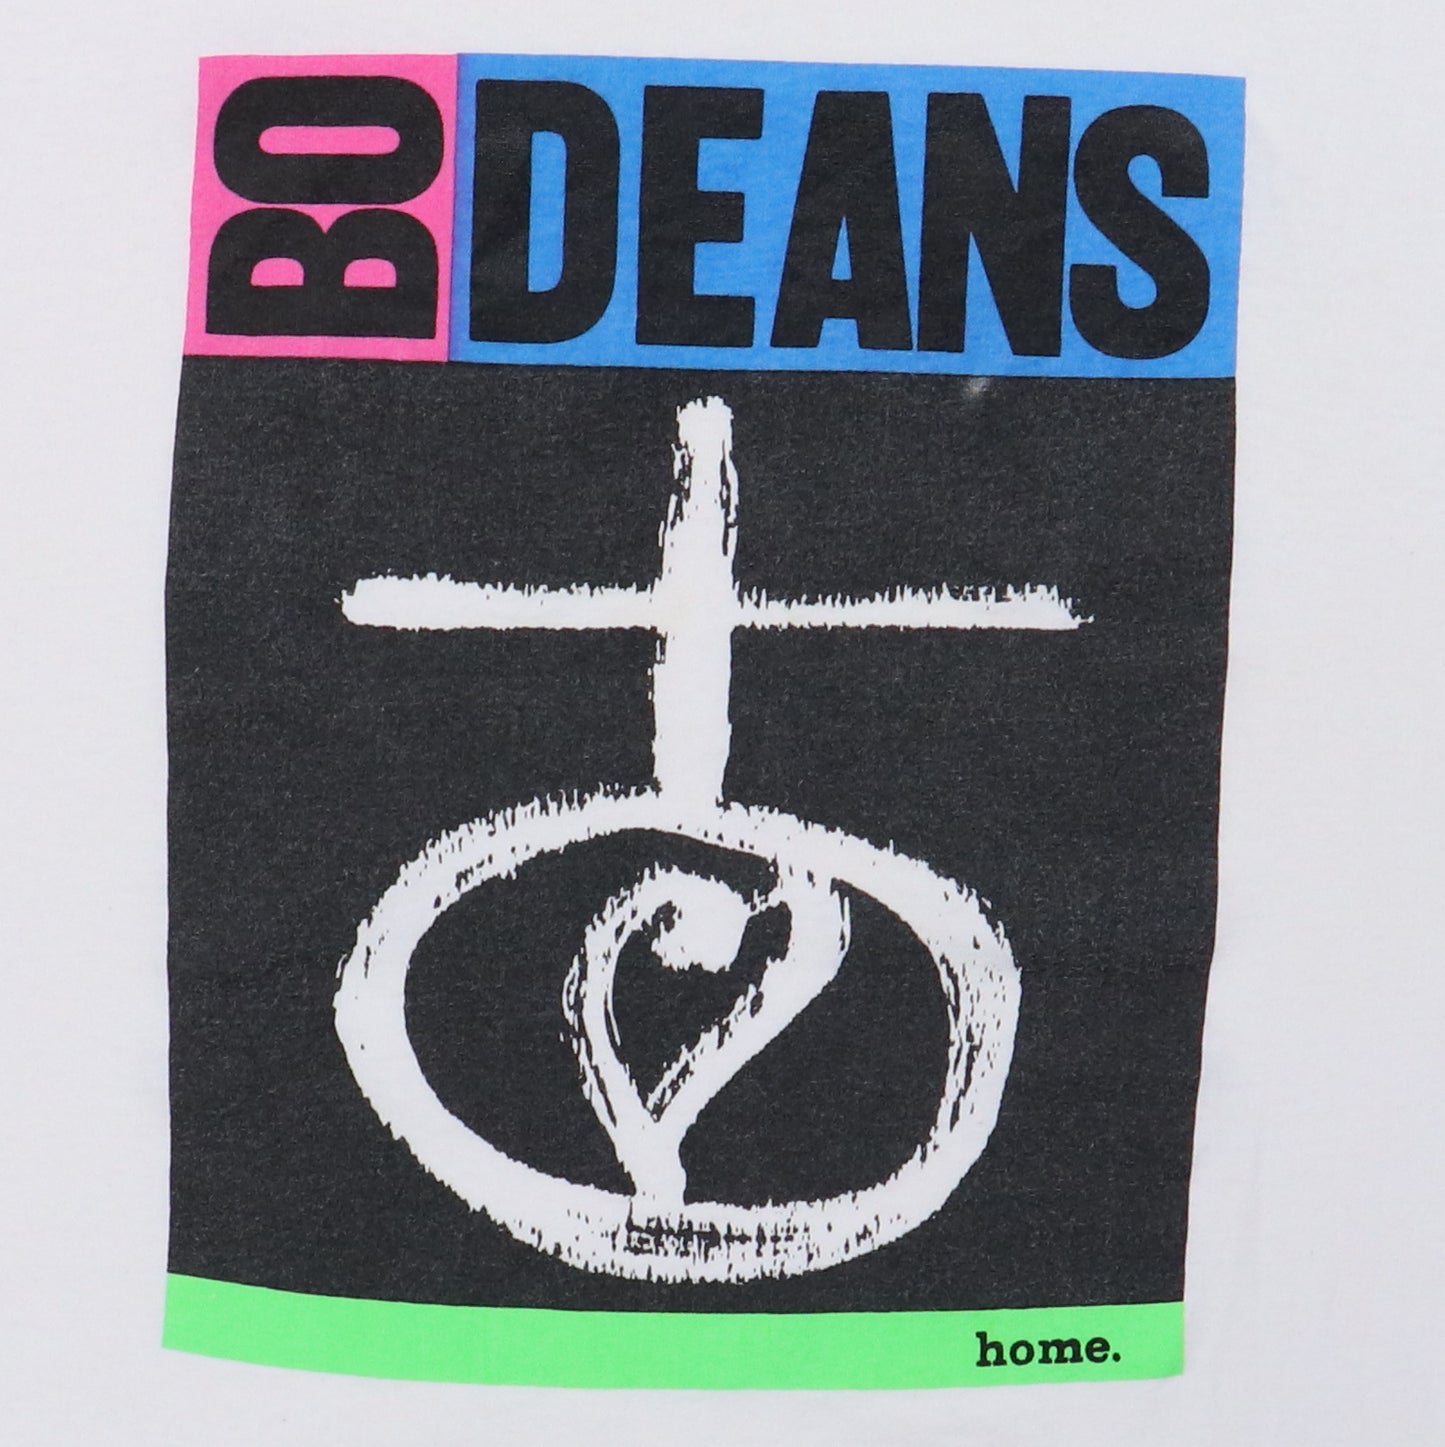 1989 Bodeans Home Shirt